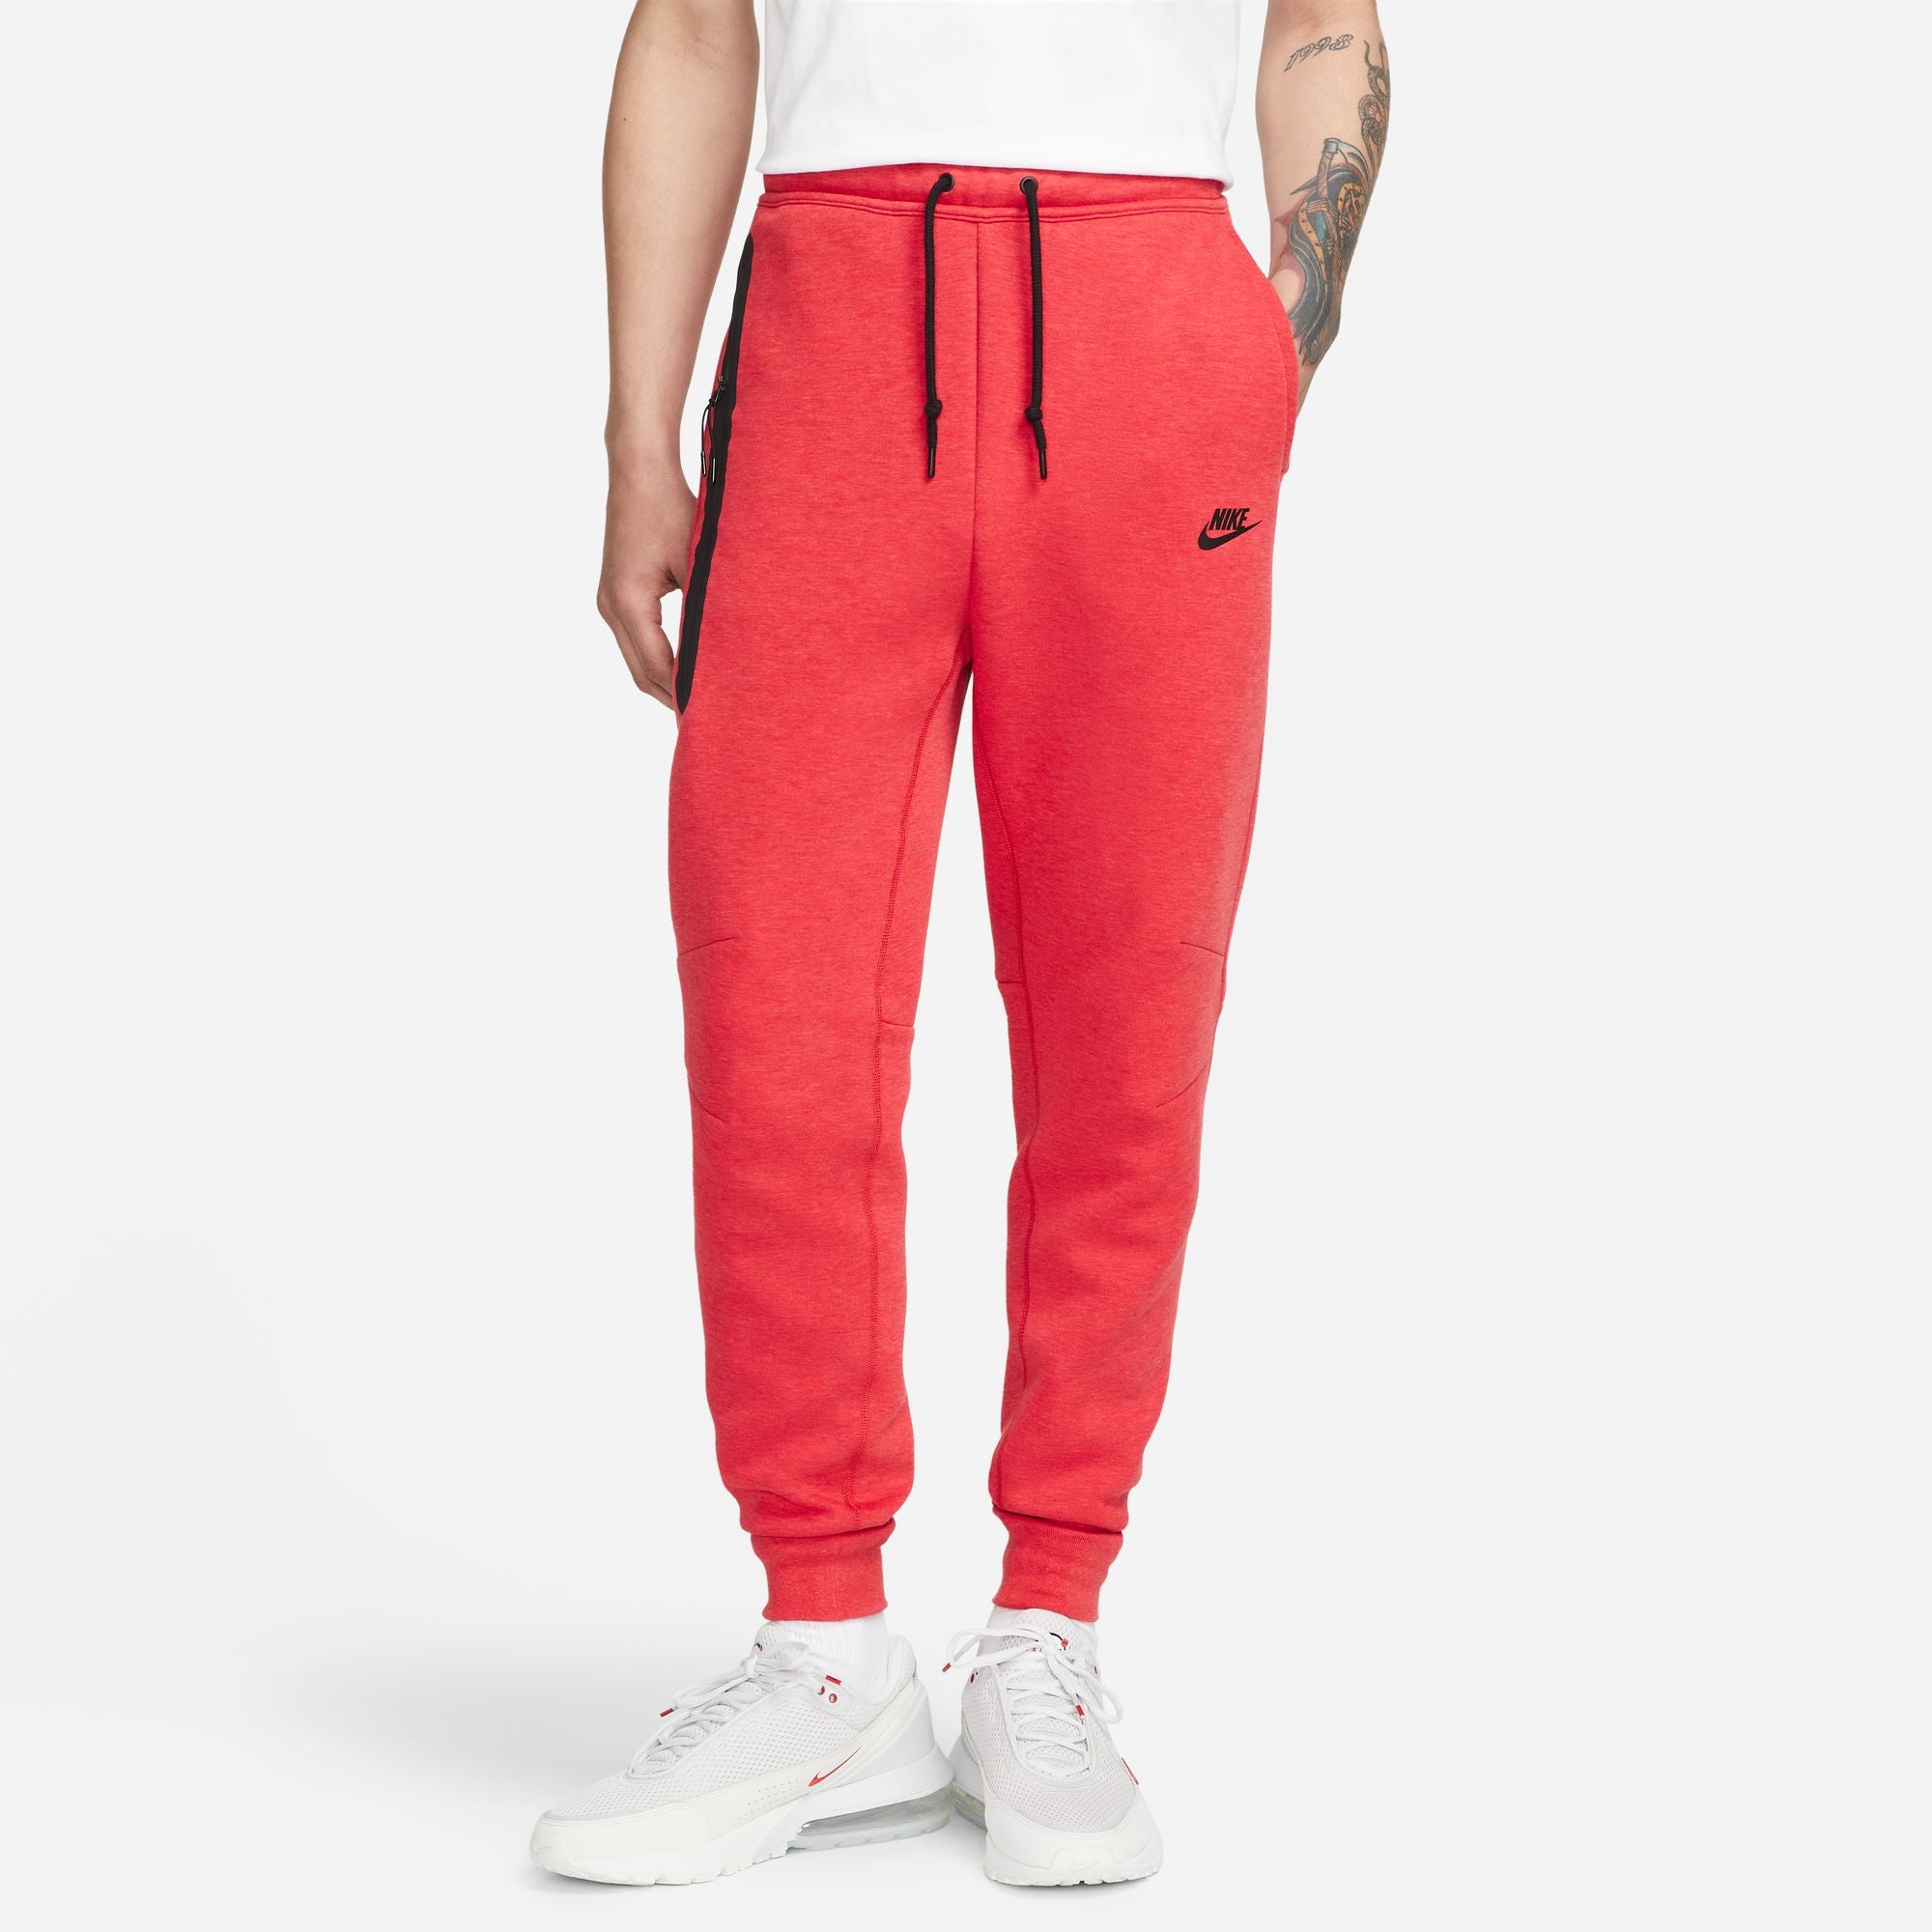 Pantaloni Nike Tech Fleece - Rossi